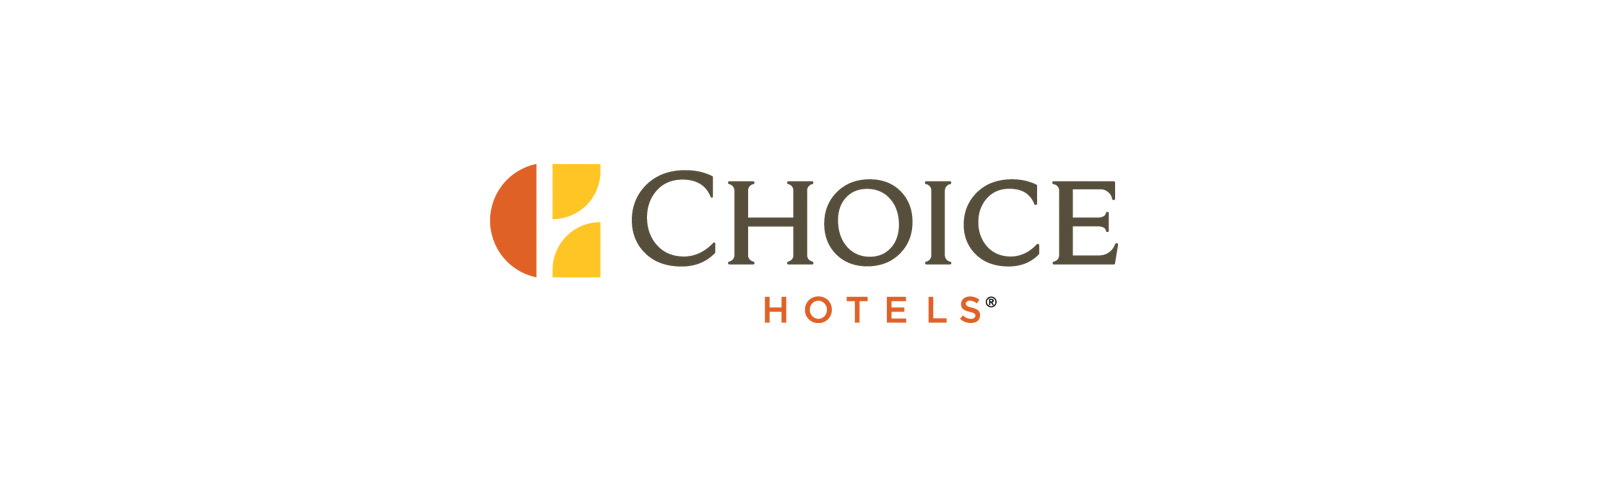 Choice_Hotels_Webinar_ABC-Site_Header_Placeholder_1600x489 copy